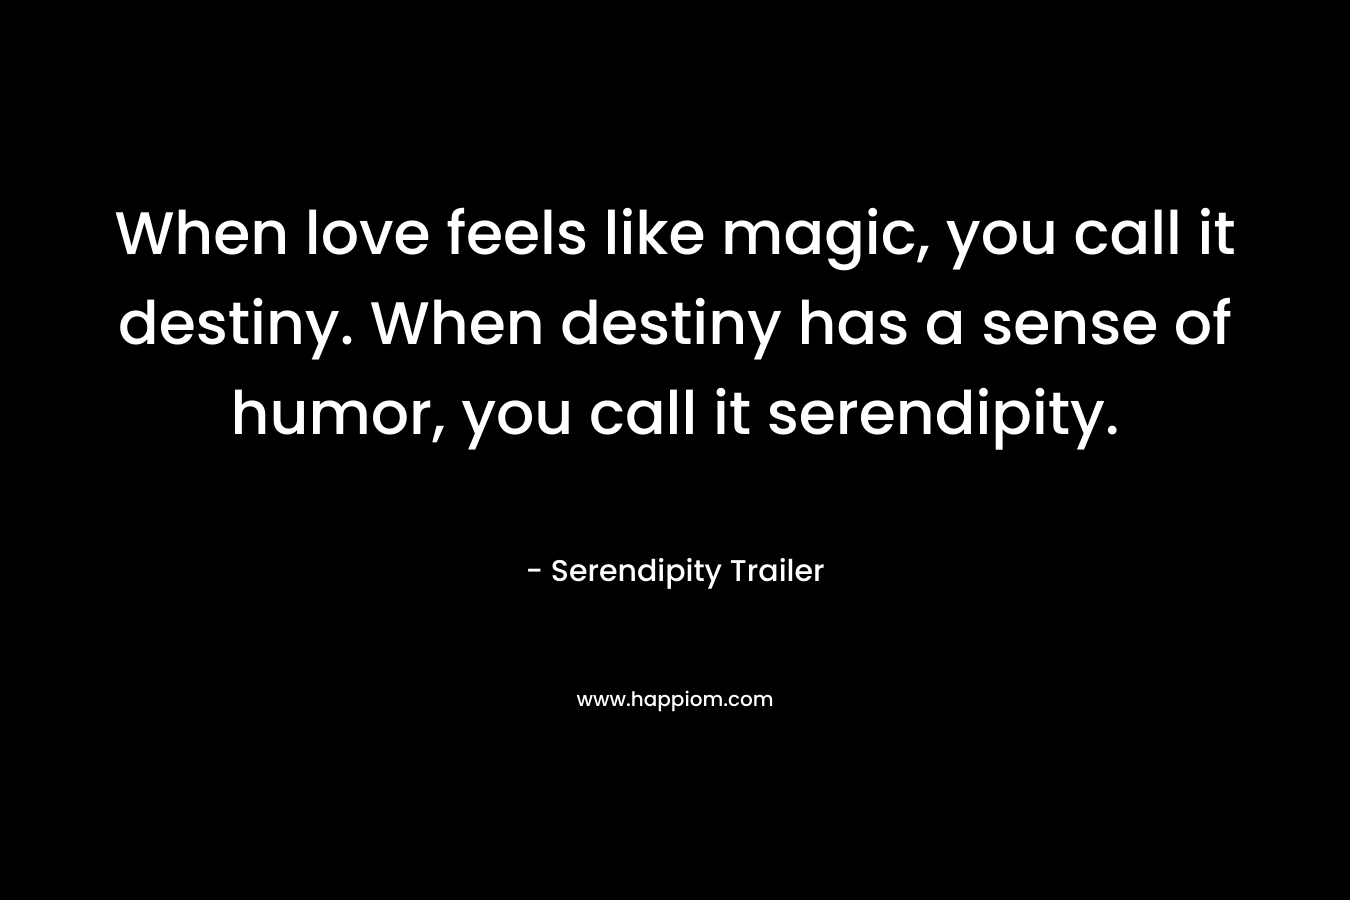 When love feels like magic, you call it destiny. When destiny has a sense of humor, you call it serendipity.